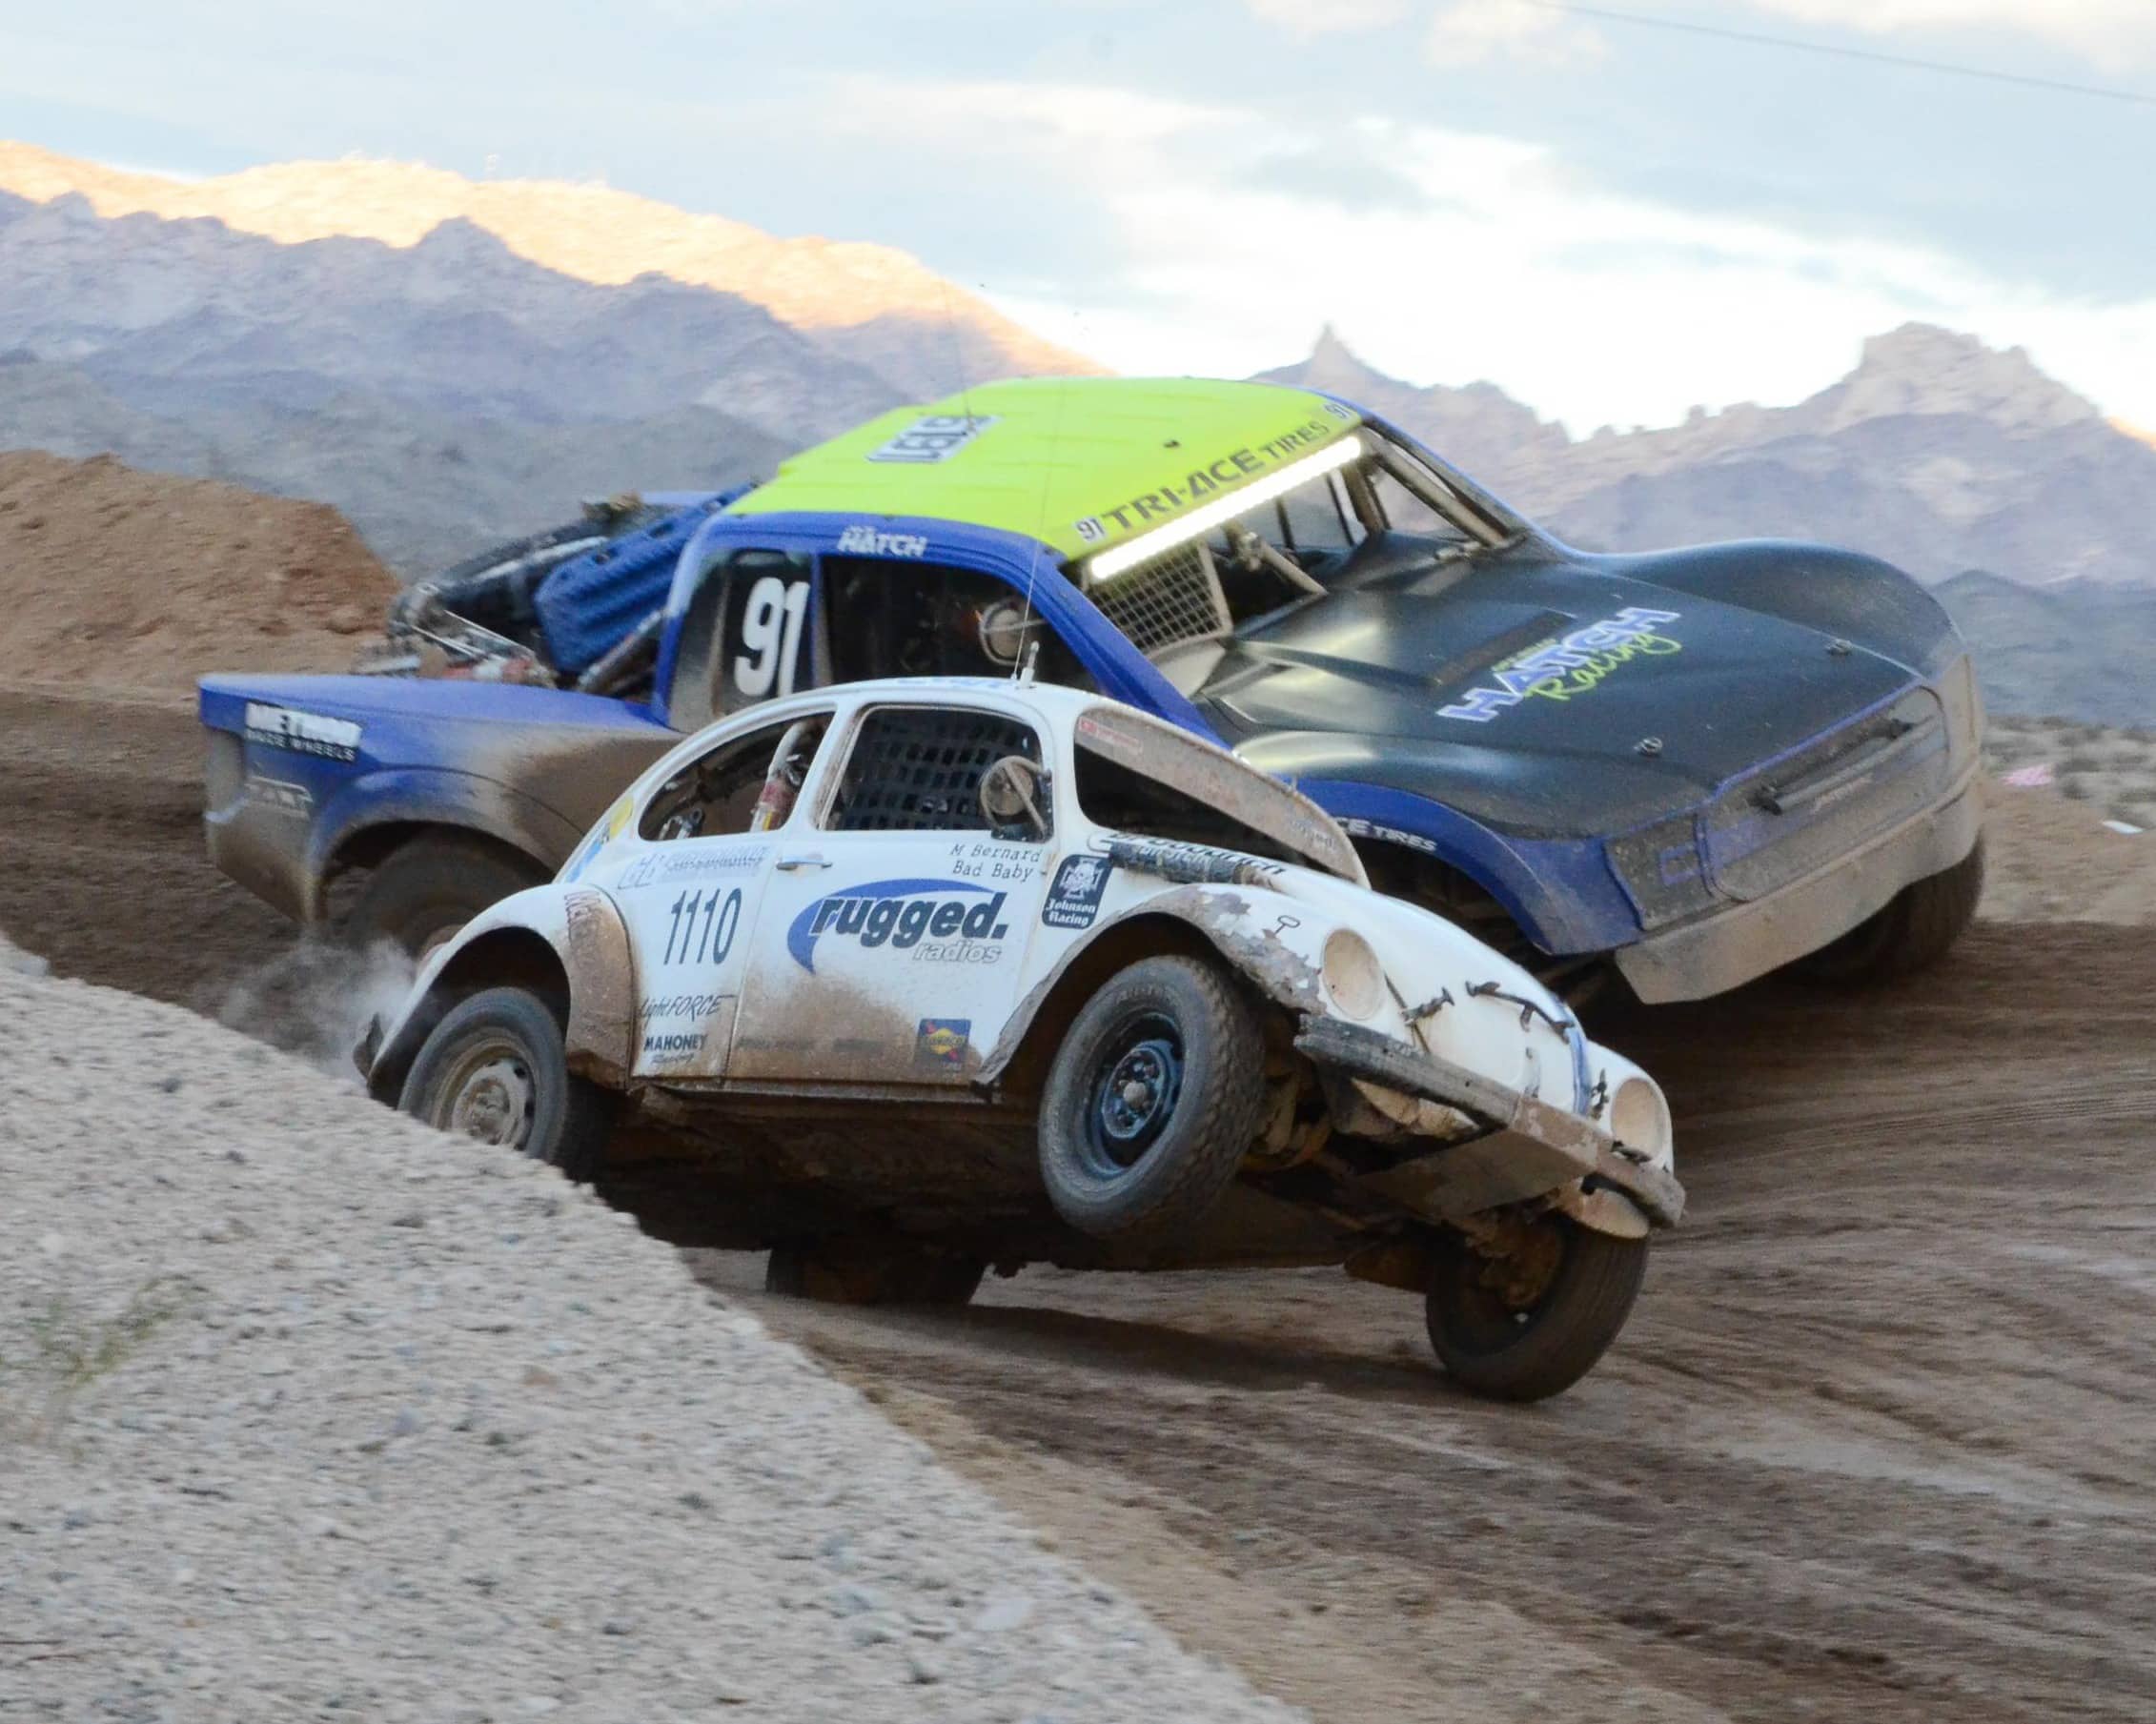 A VW Bettle racing a truck around a dirt track.